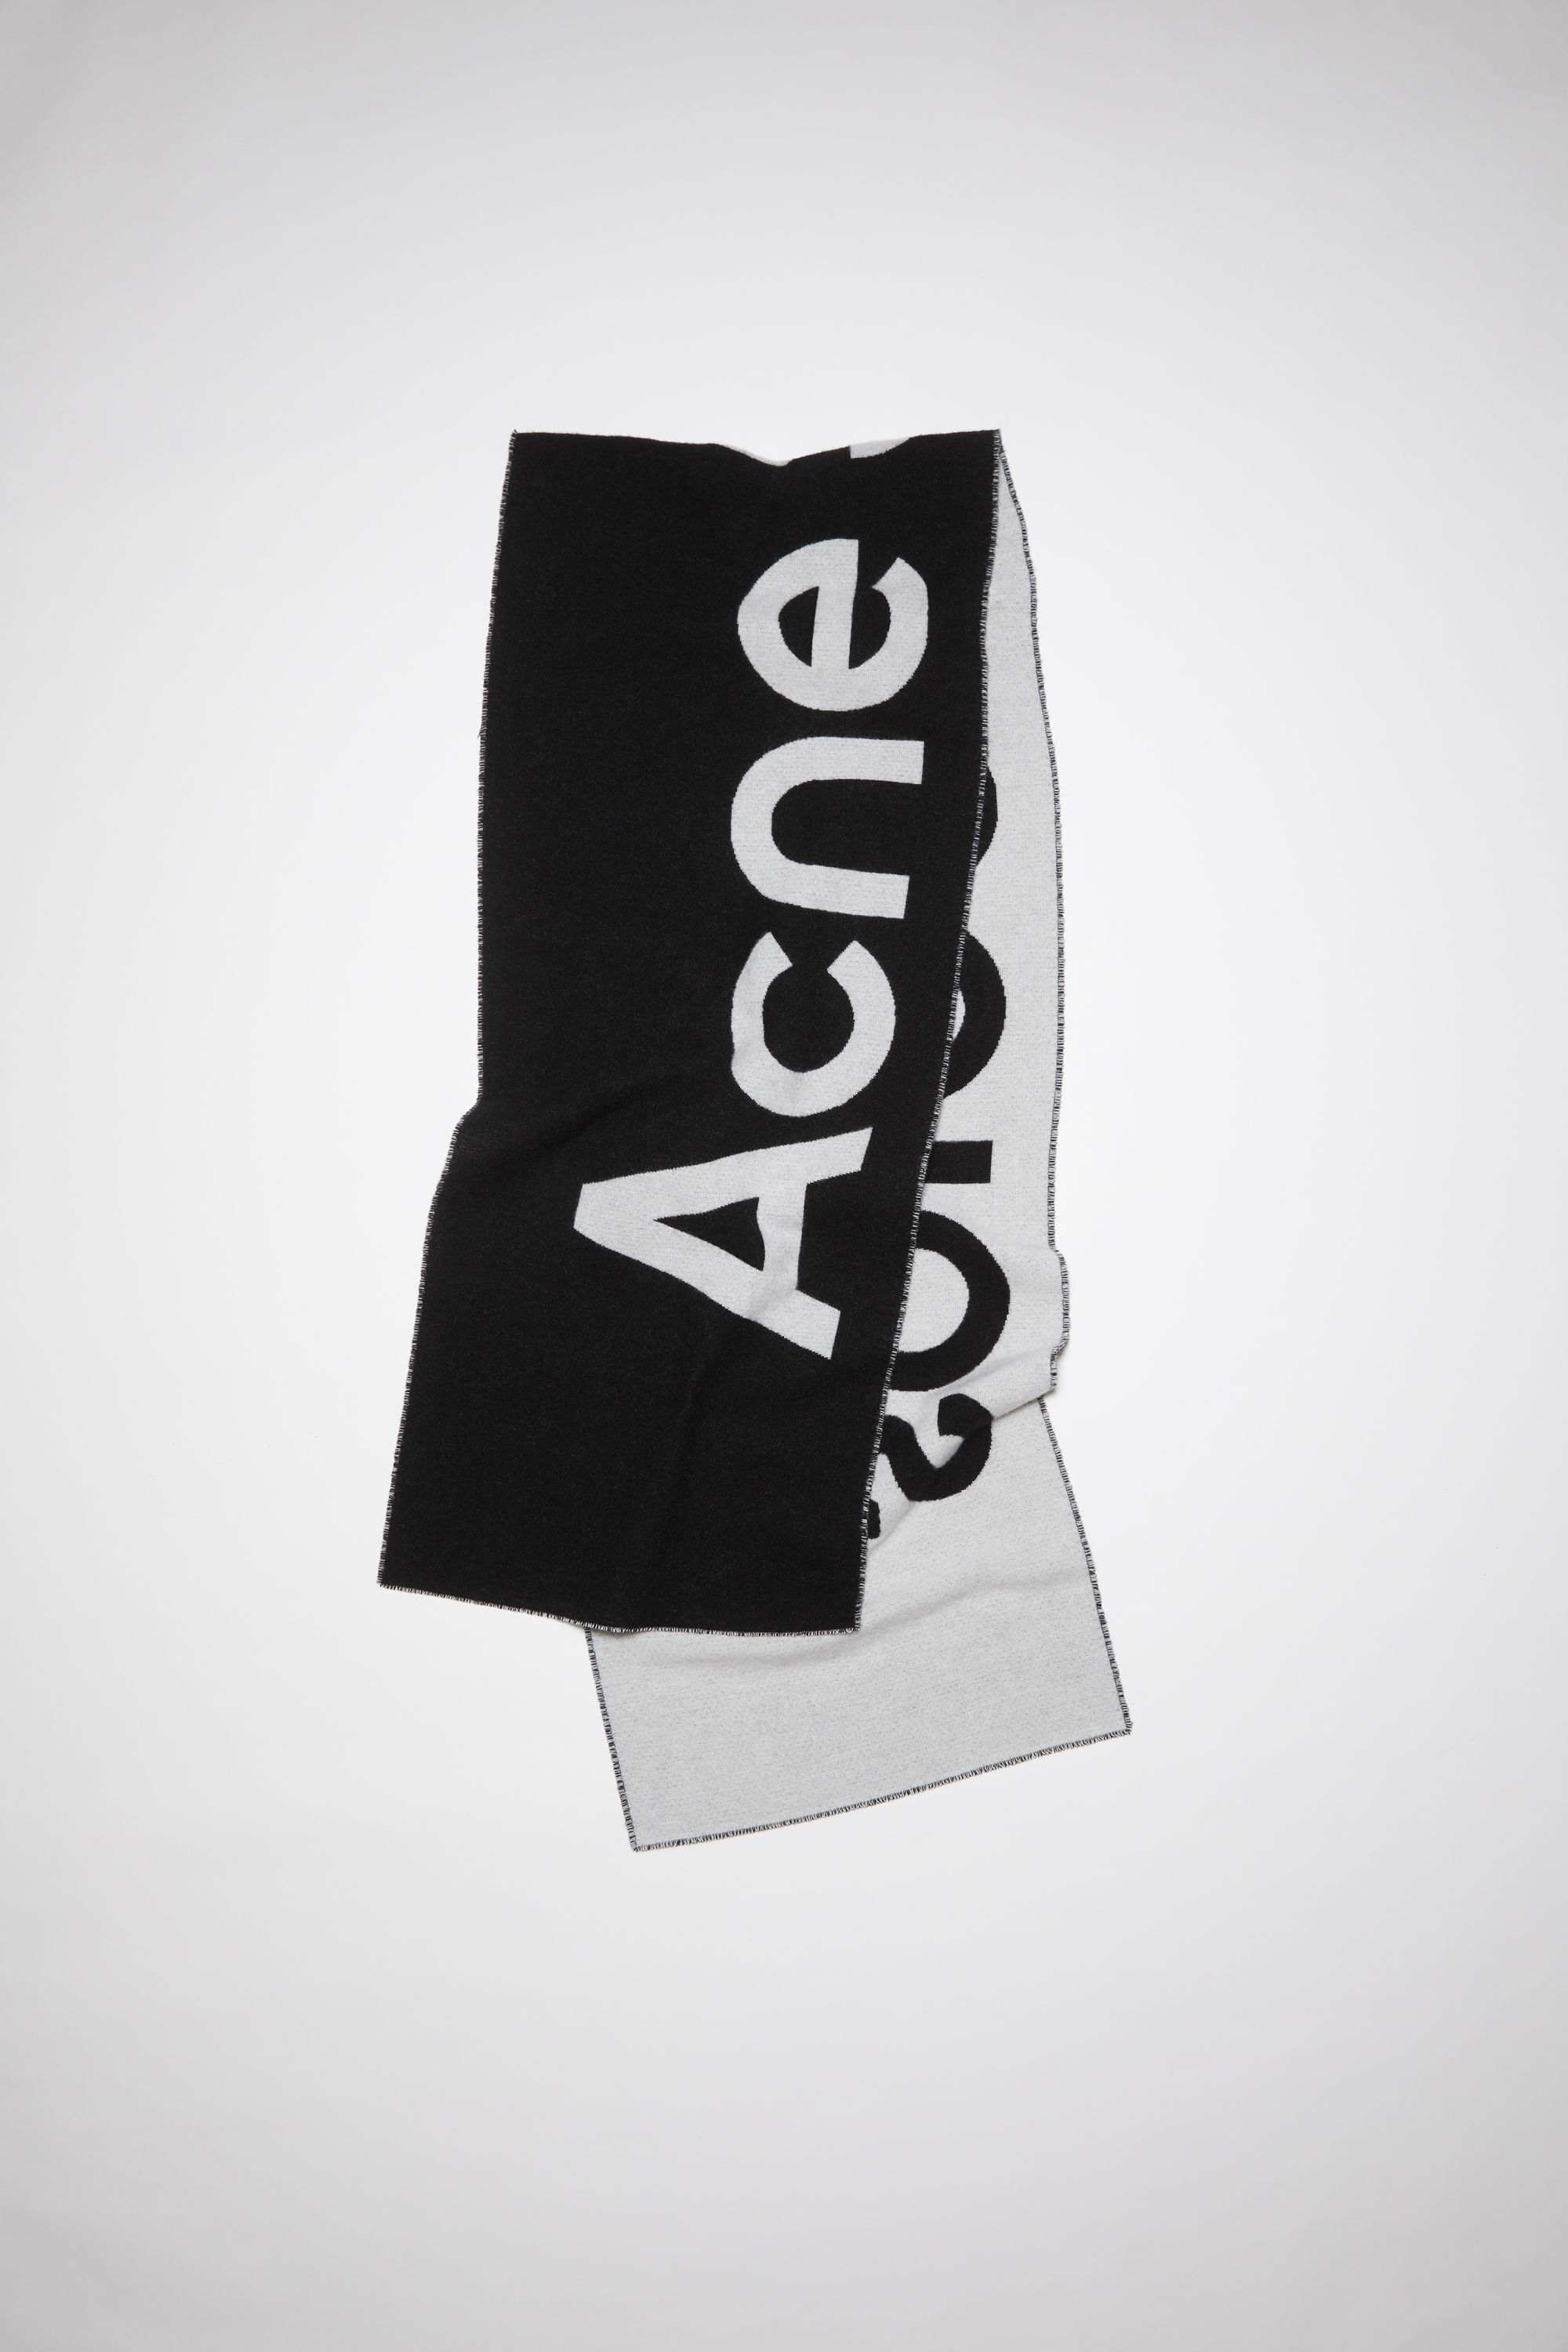 Acne Studios - ロゴジャカードスカーフ - ブラック/ホワイト